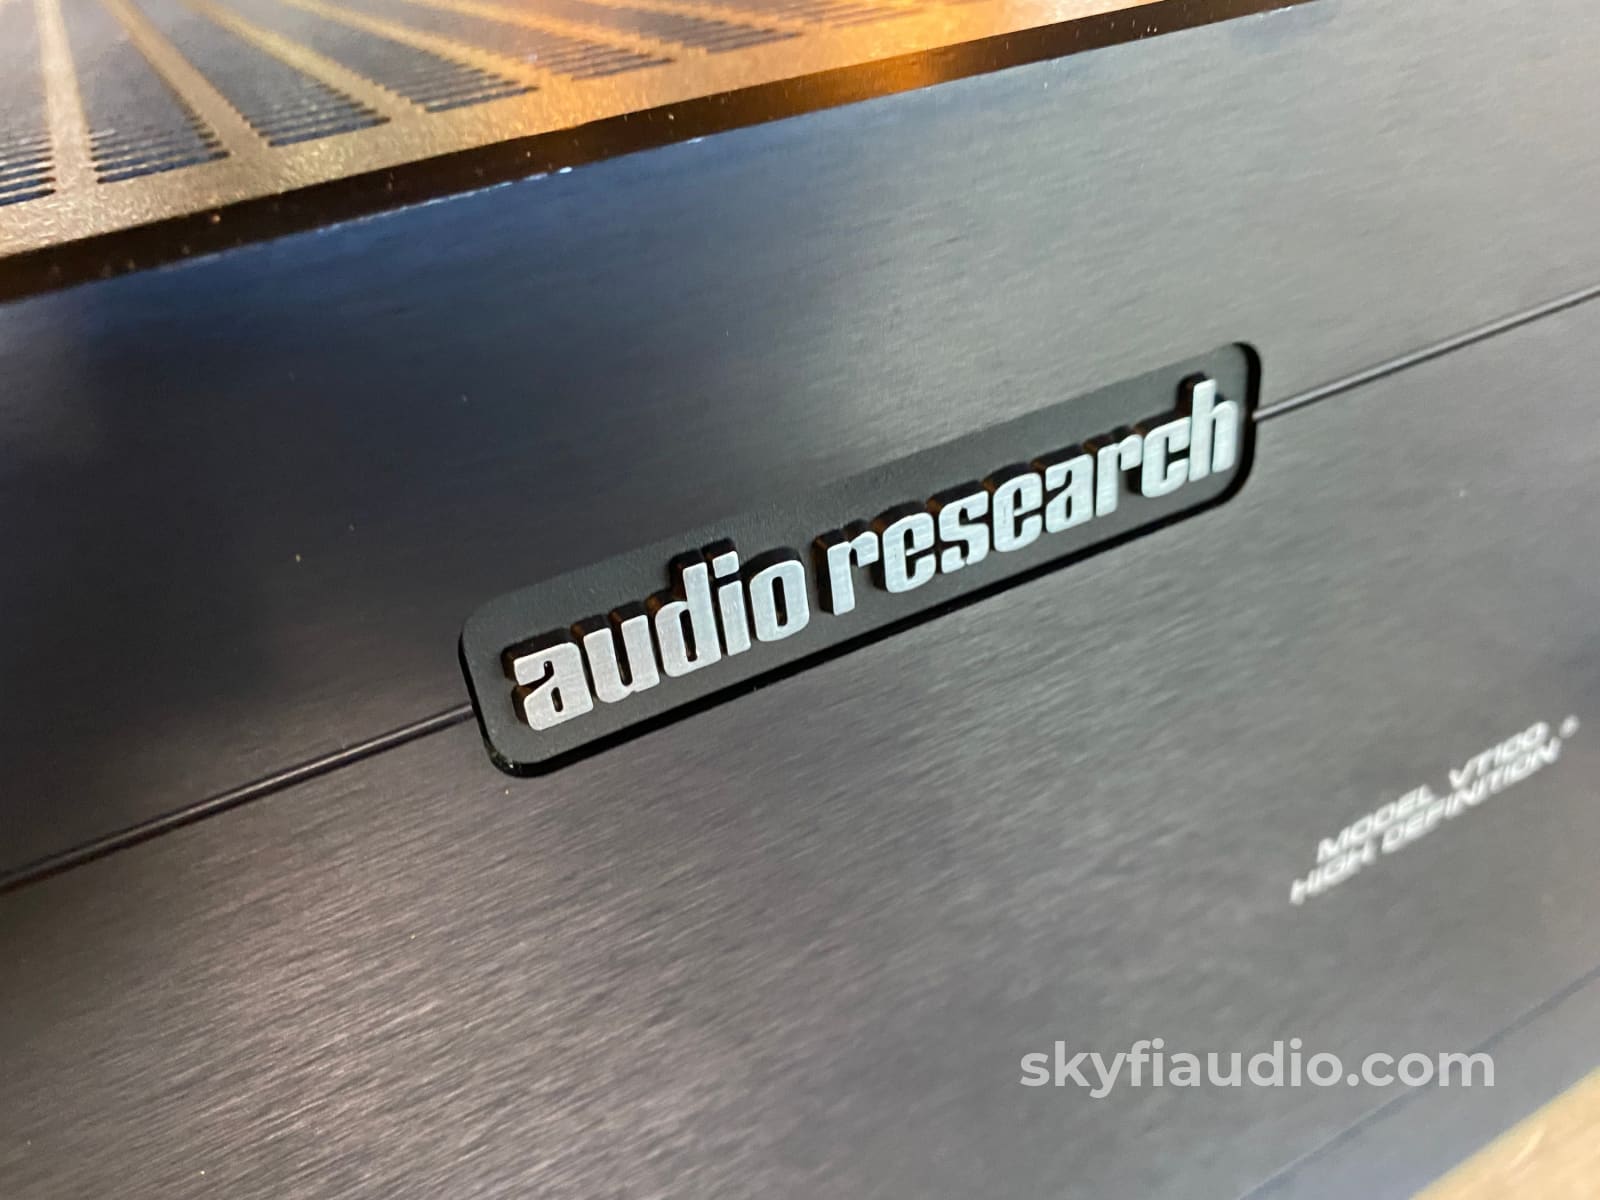 Audio Research Vt100 Mkii Tube Amplifier In Rare Black Finish